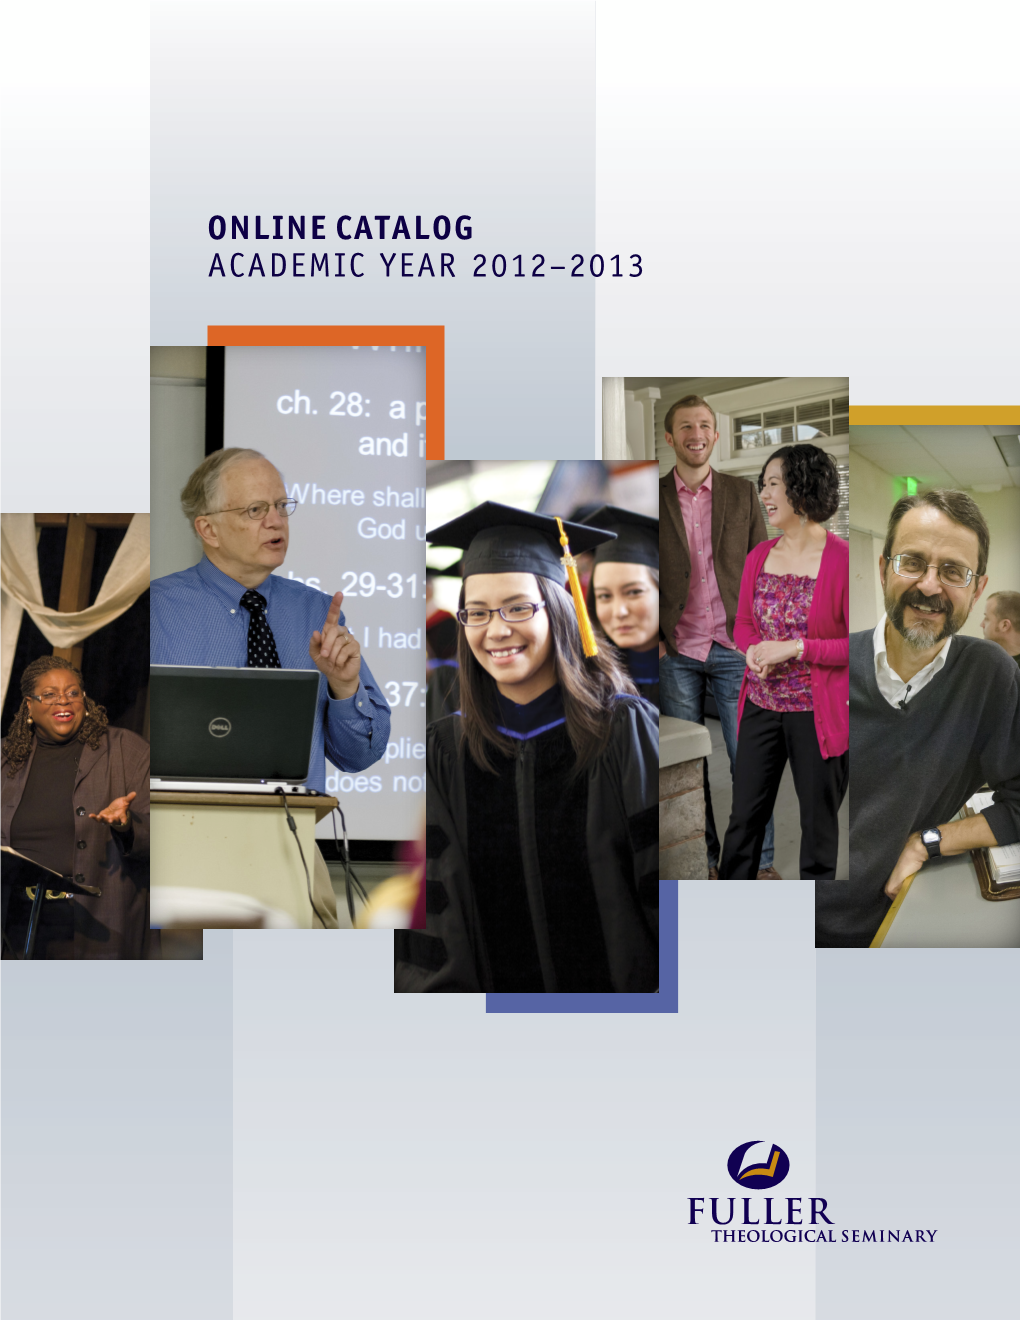 Online Catalog: Academic Year 2012-2013